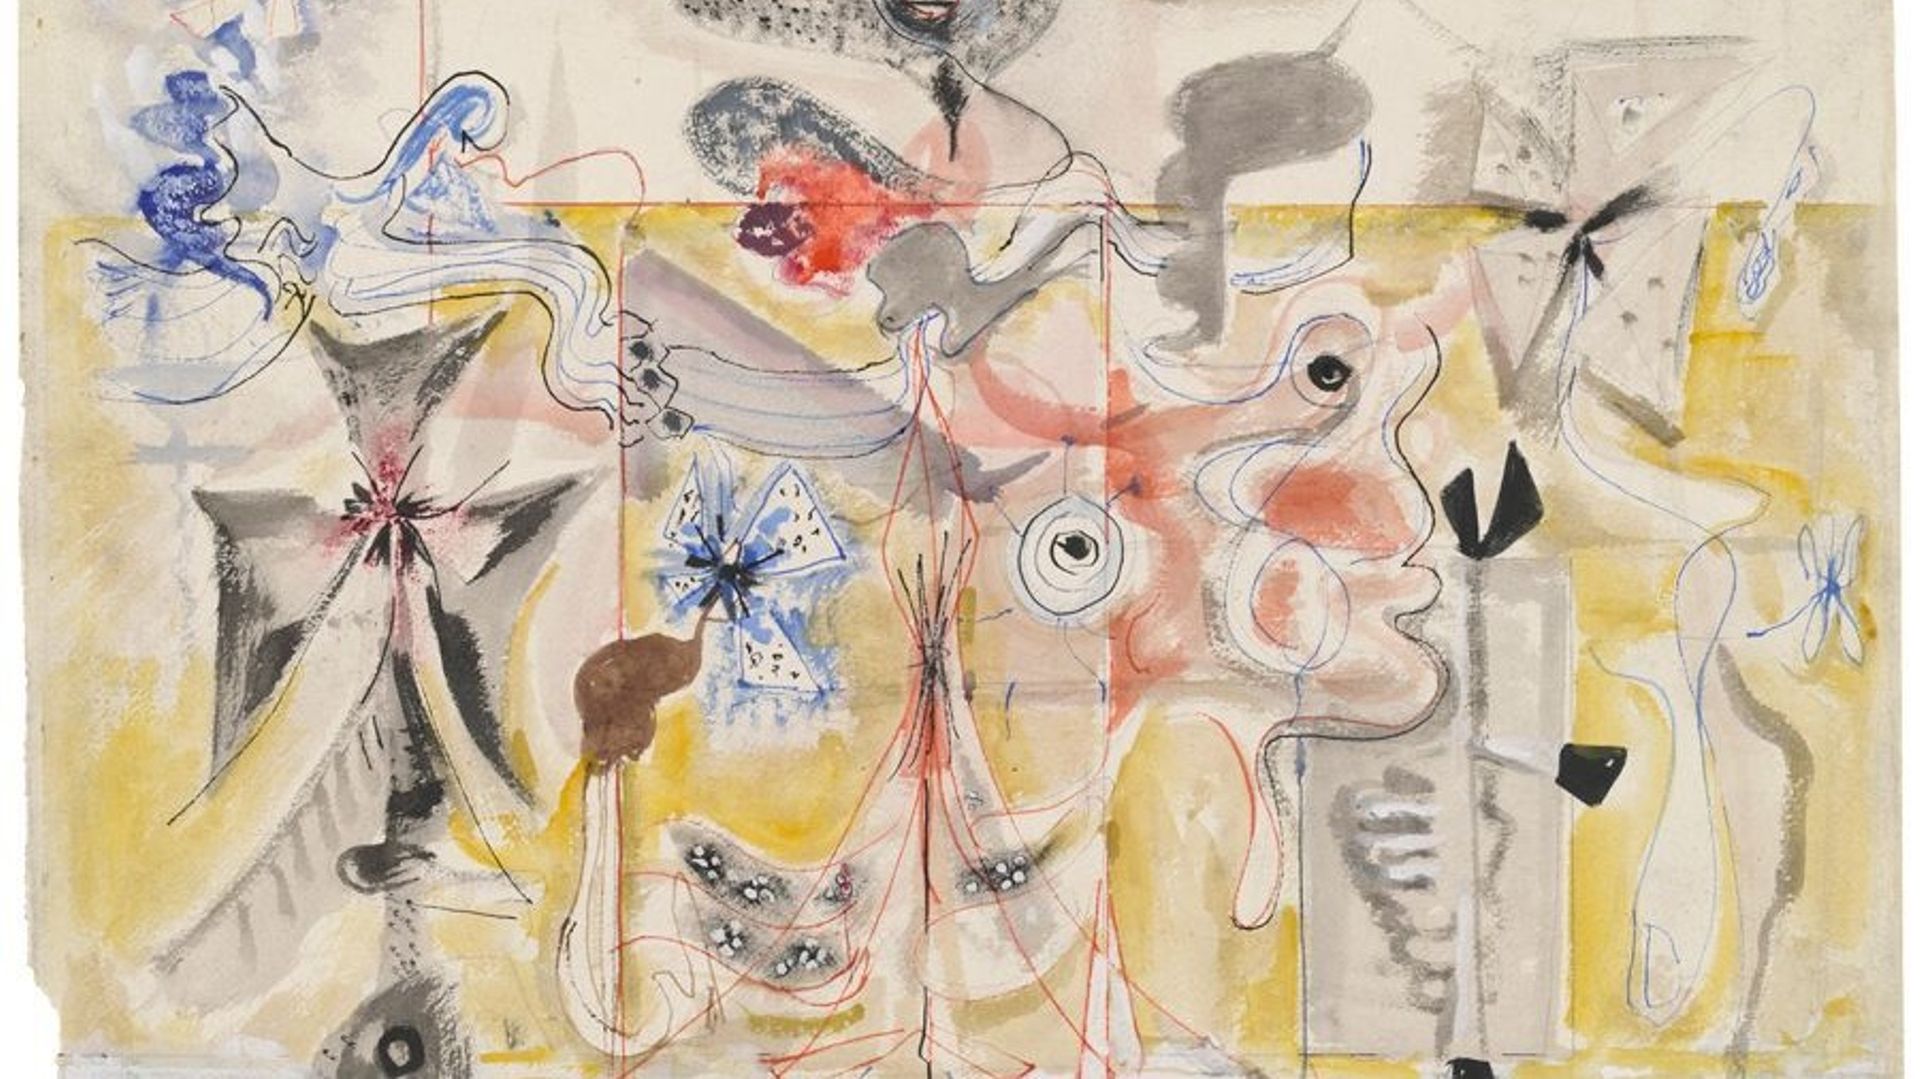 "Untitled" de Mark Rothko (1944/1945) sera exposé à la National Gallery of Art de Washington dans le cadre de "Mark Rothko : Paintings on Paper".